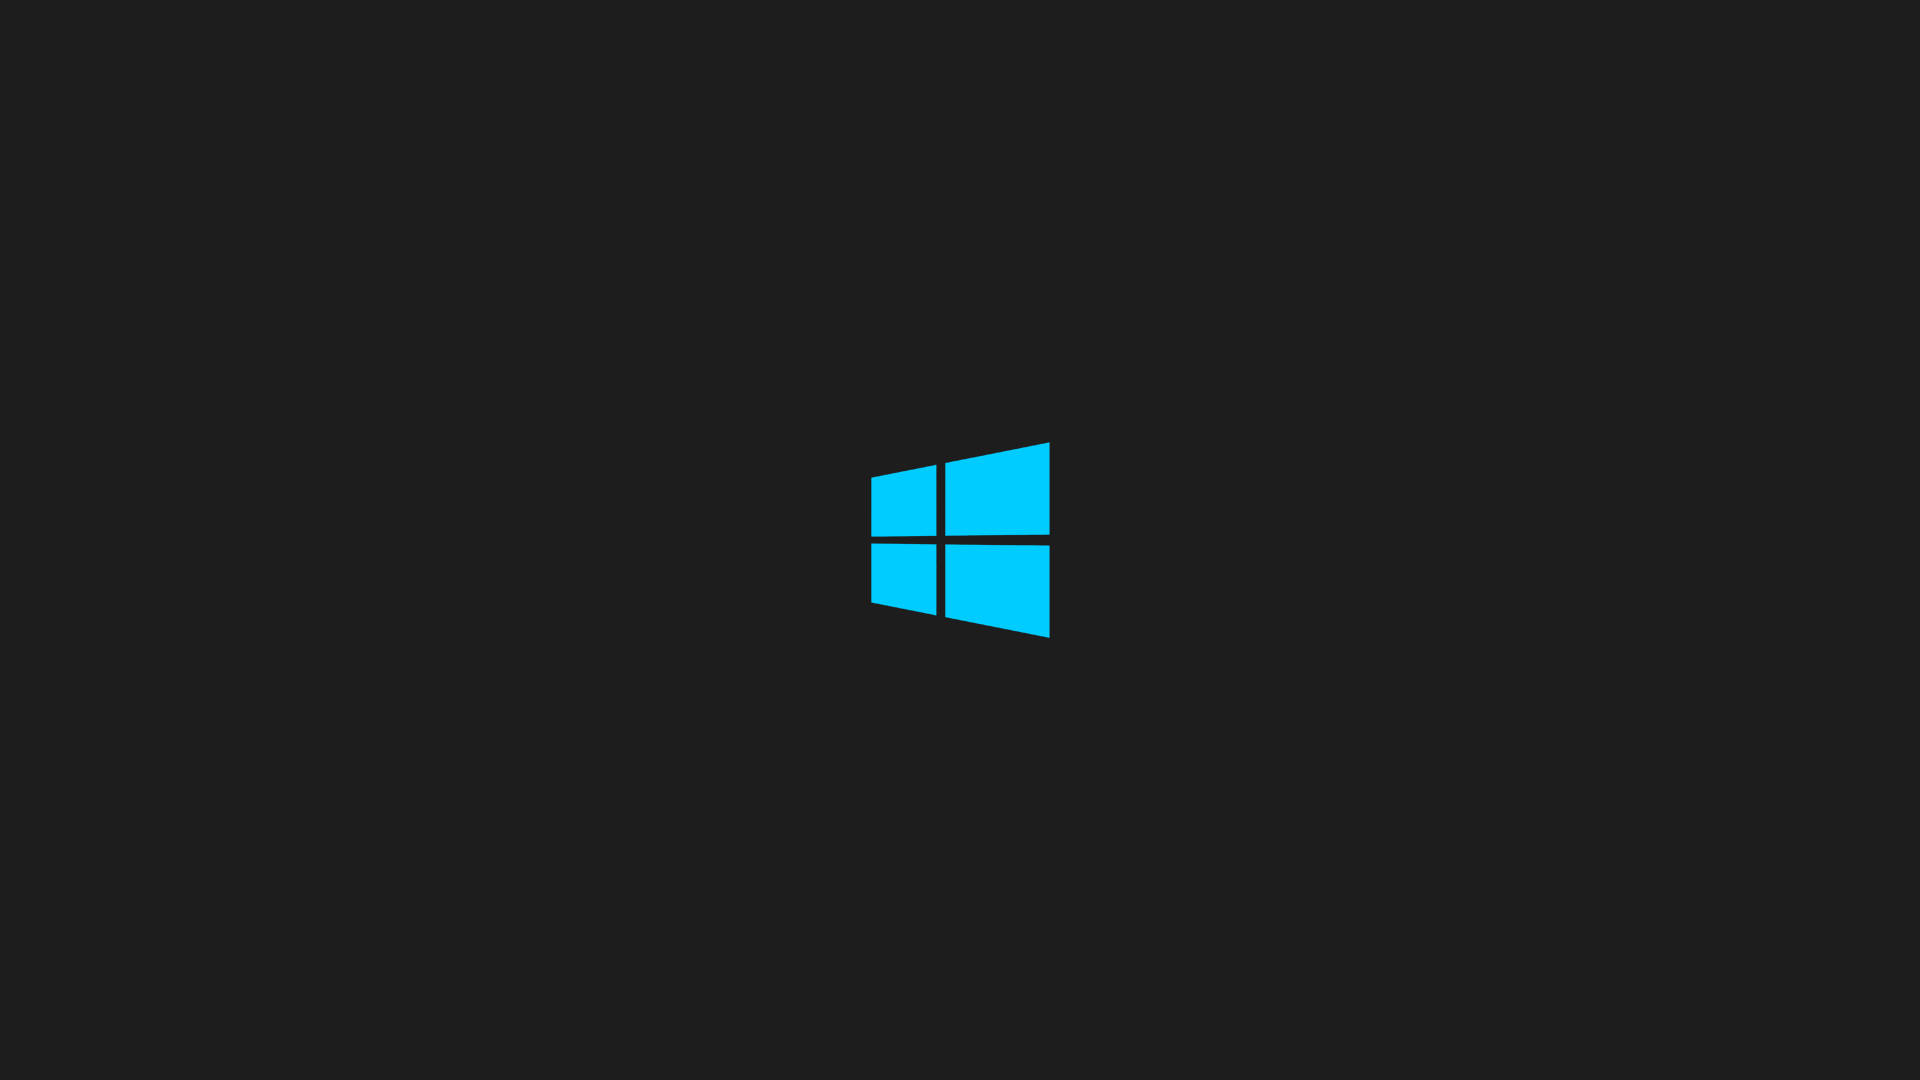 Black Windows 10 Hd Blue Logo Background